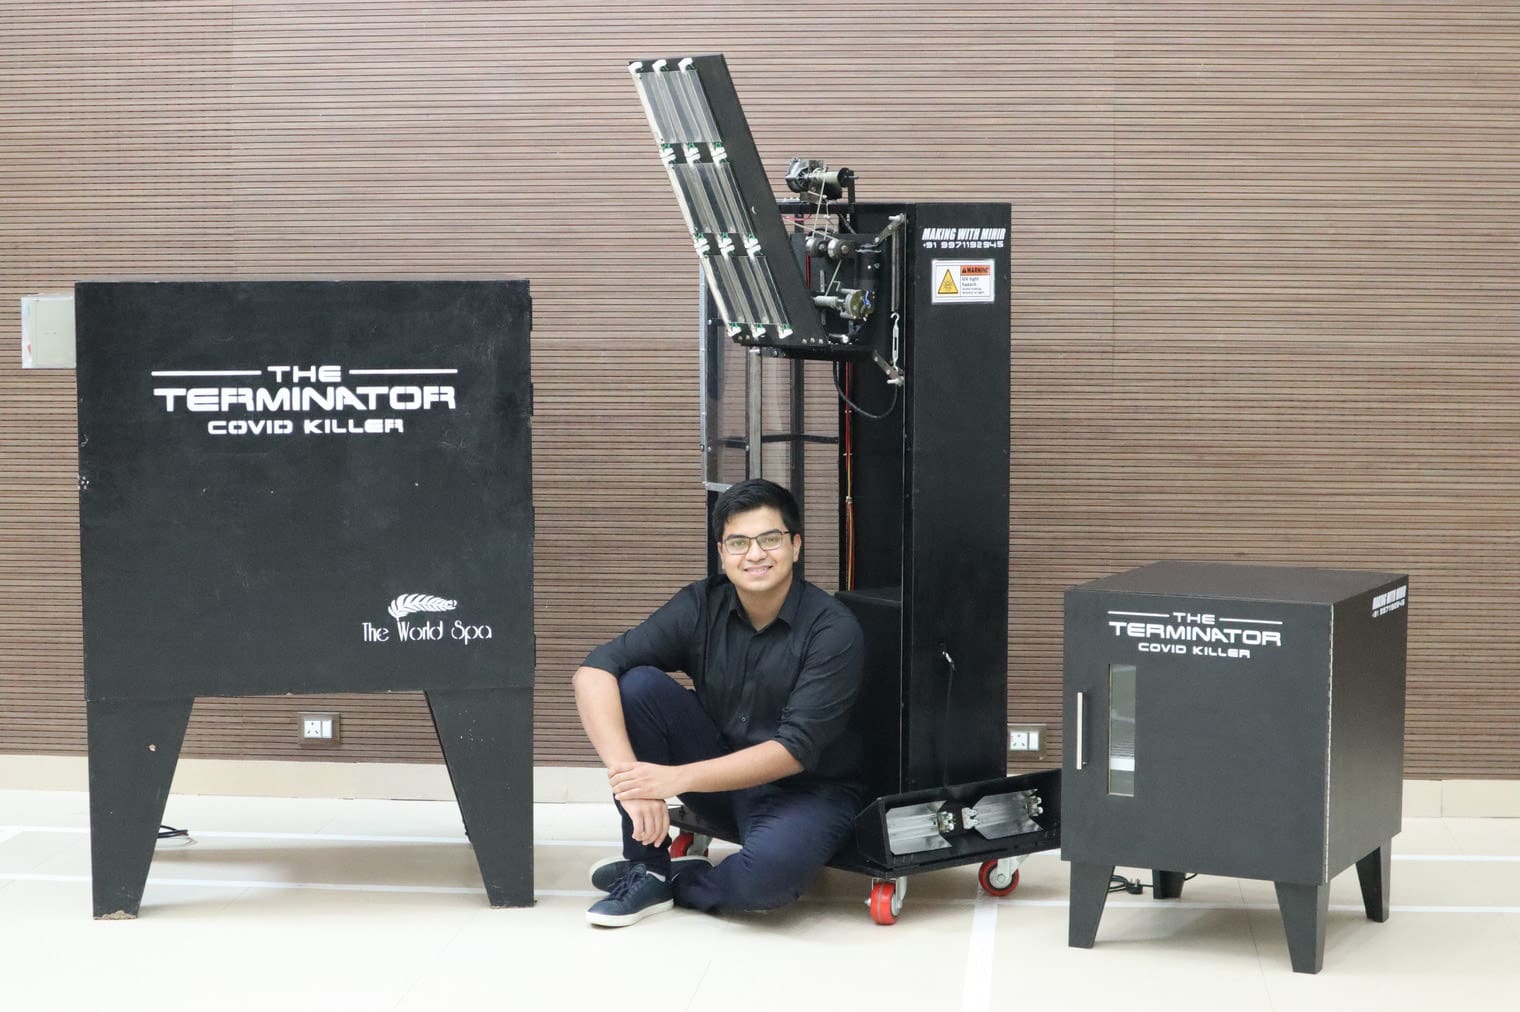 Mihir created UVC machines to sanitise rooms during lockdown